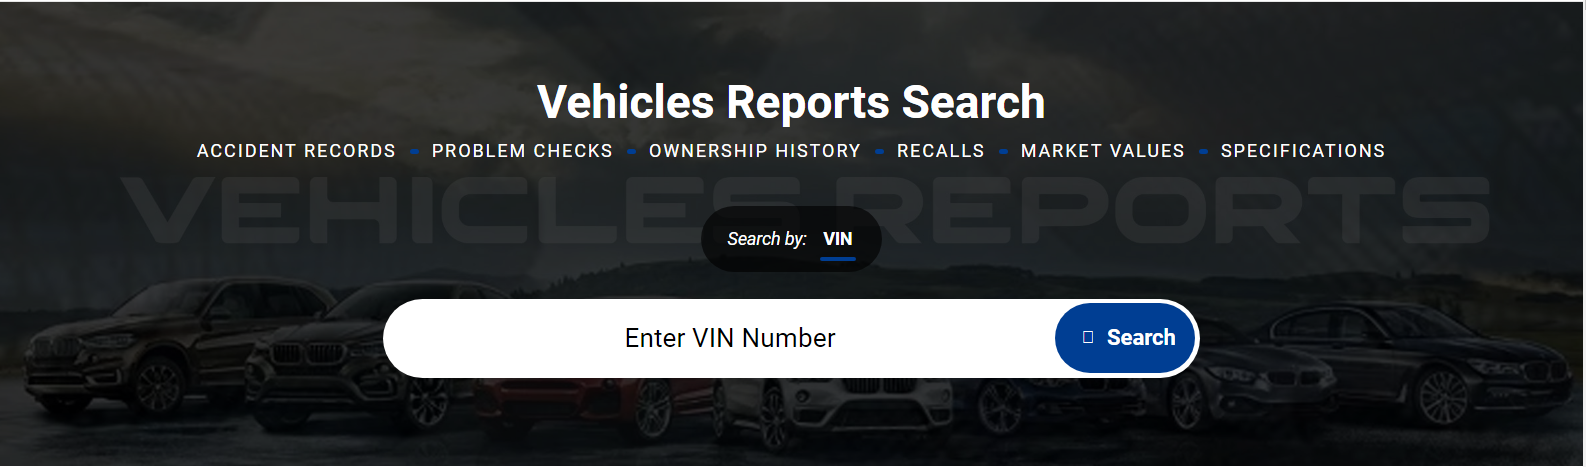 vehicle reports